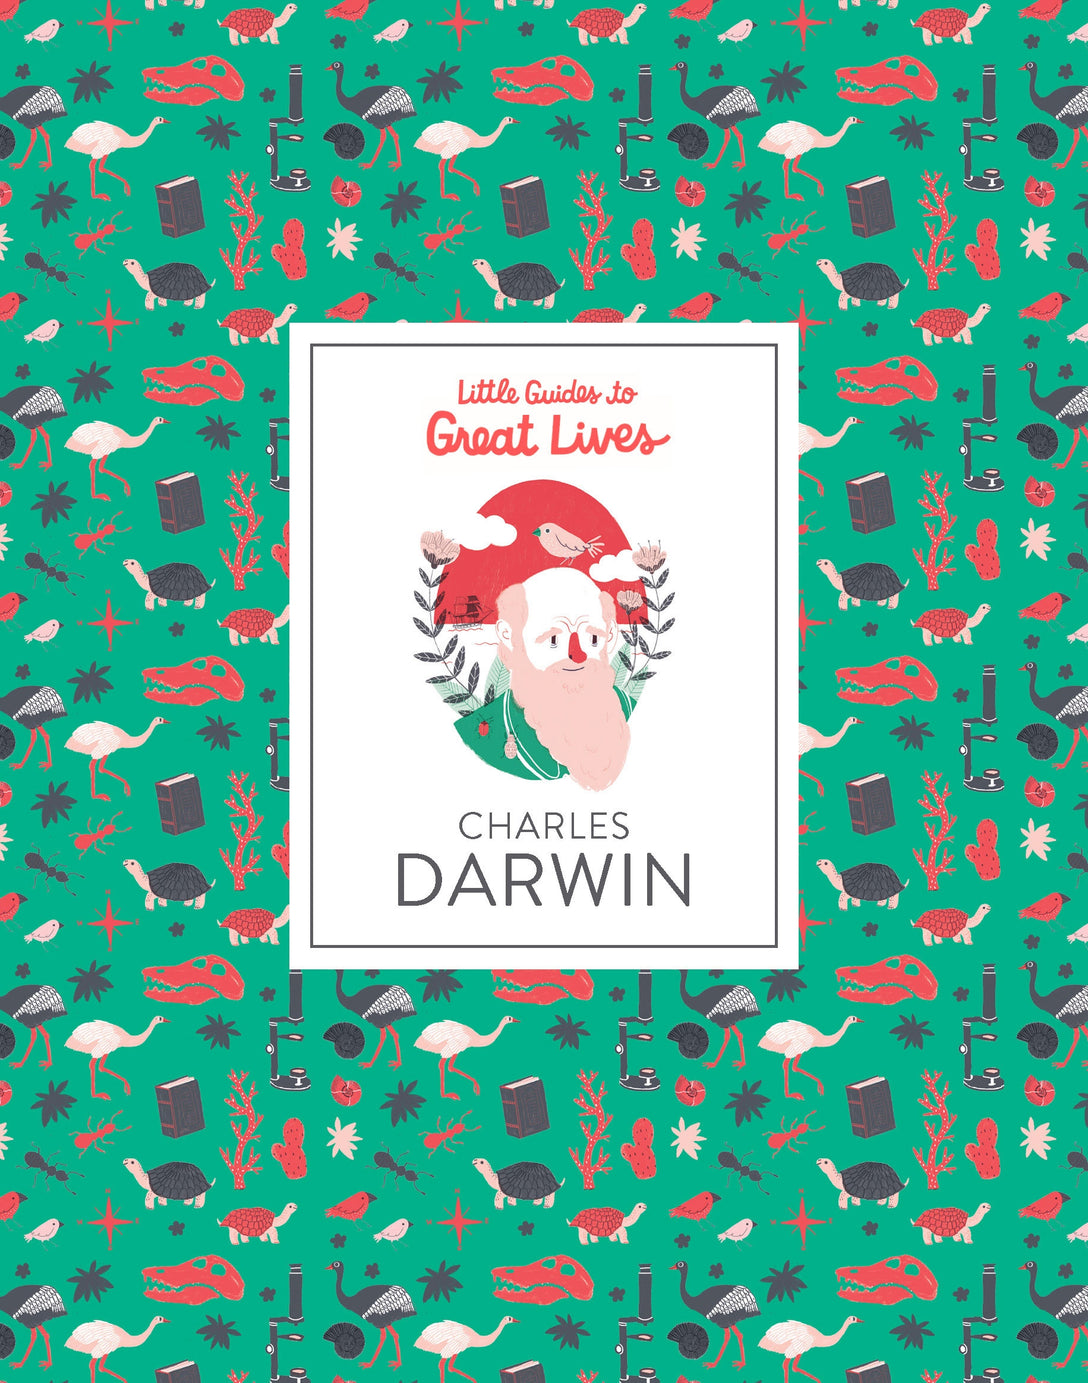 Little Guides to Great Lives: Charles Darwin by Rachel Katstaller, Dan Green